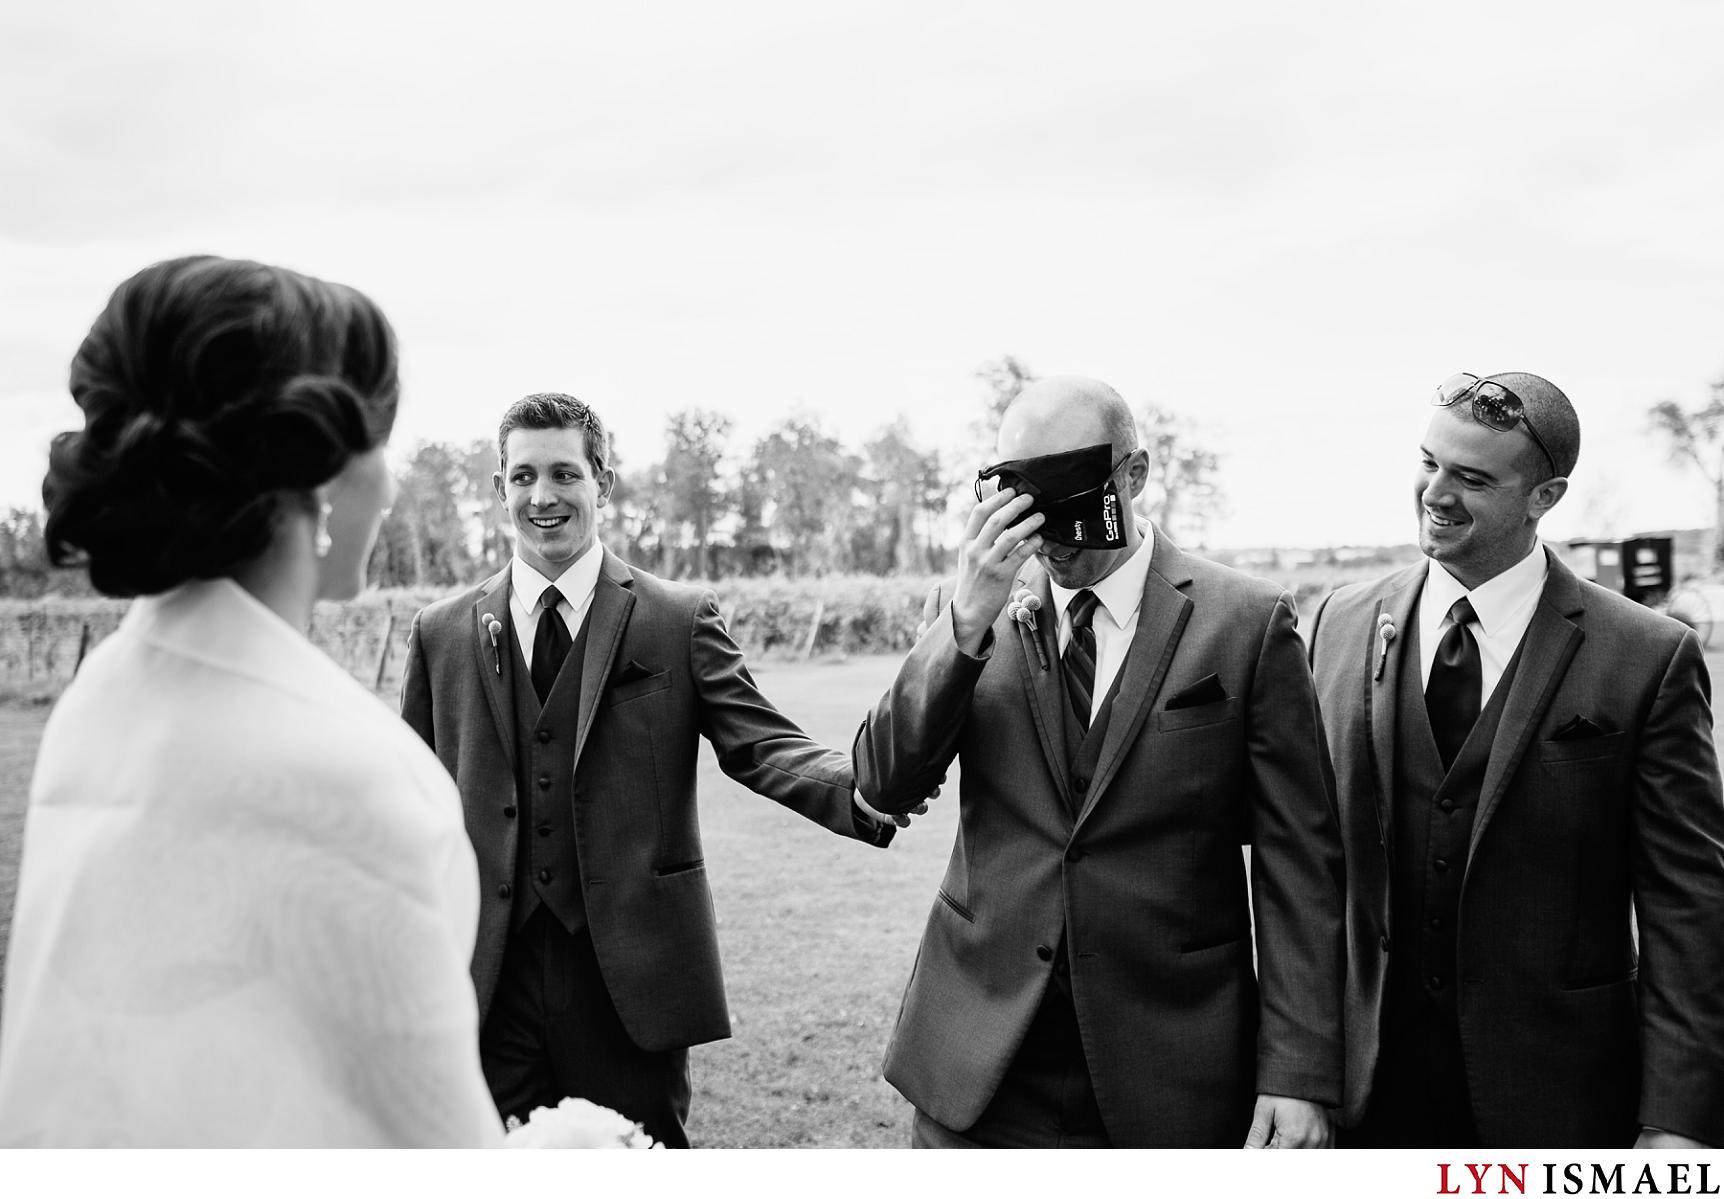 Groomsmen deliver the groom to his bride blindfolded.